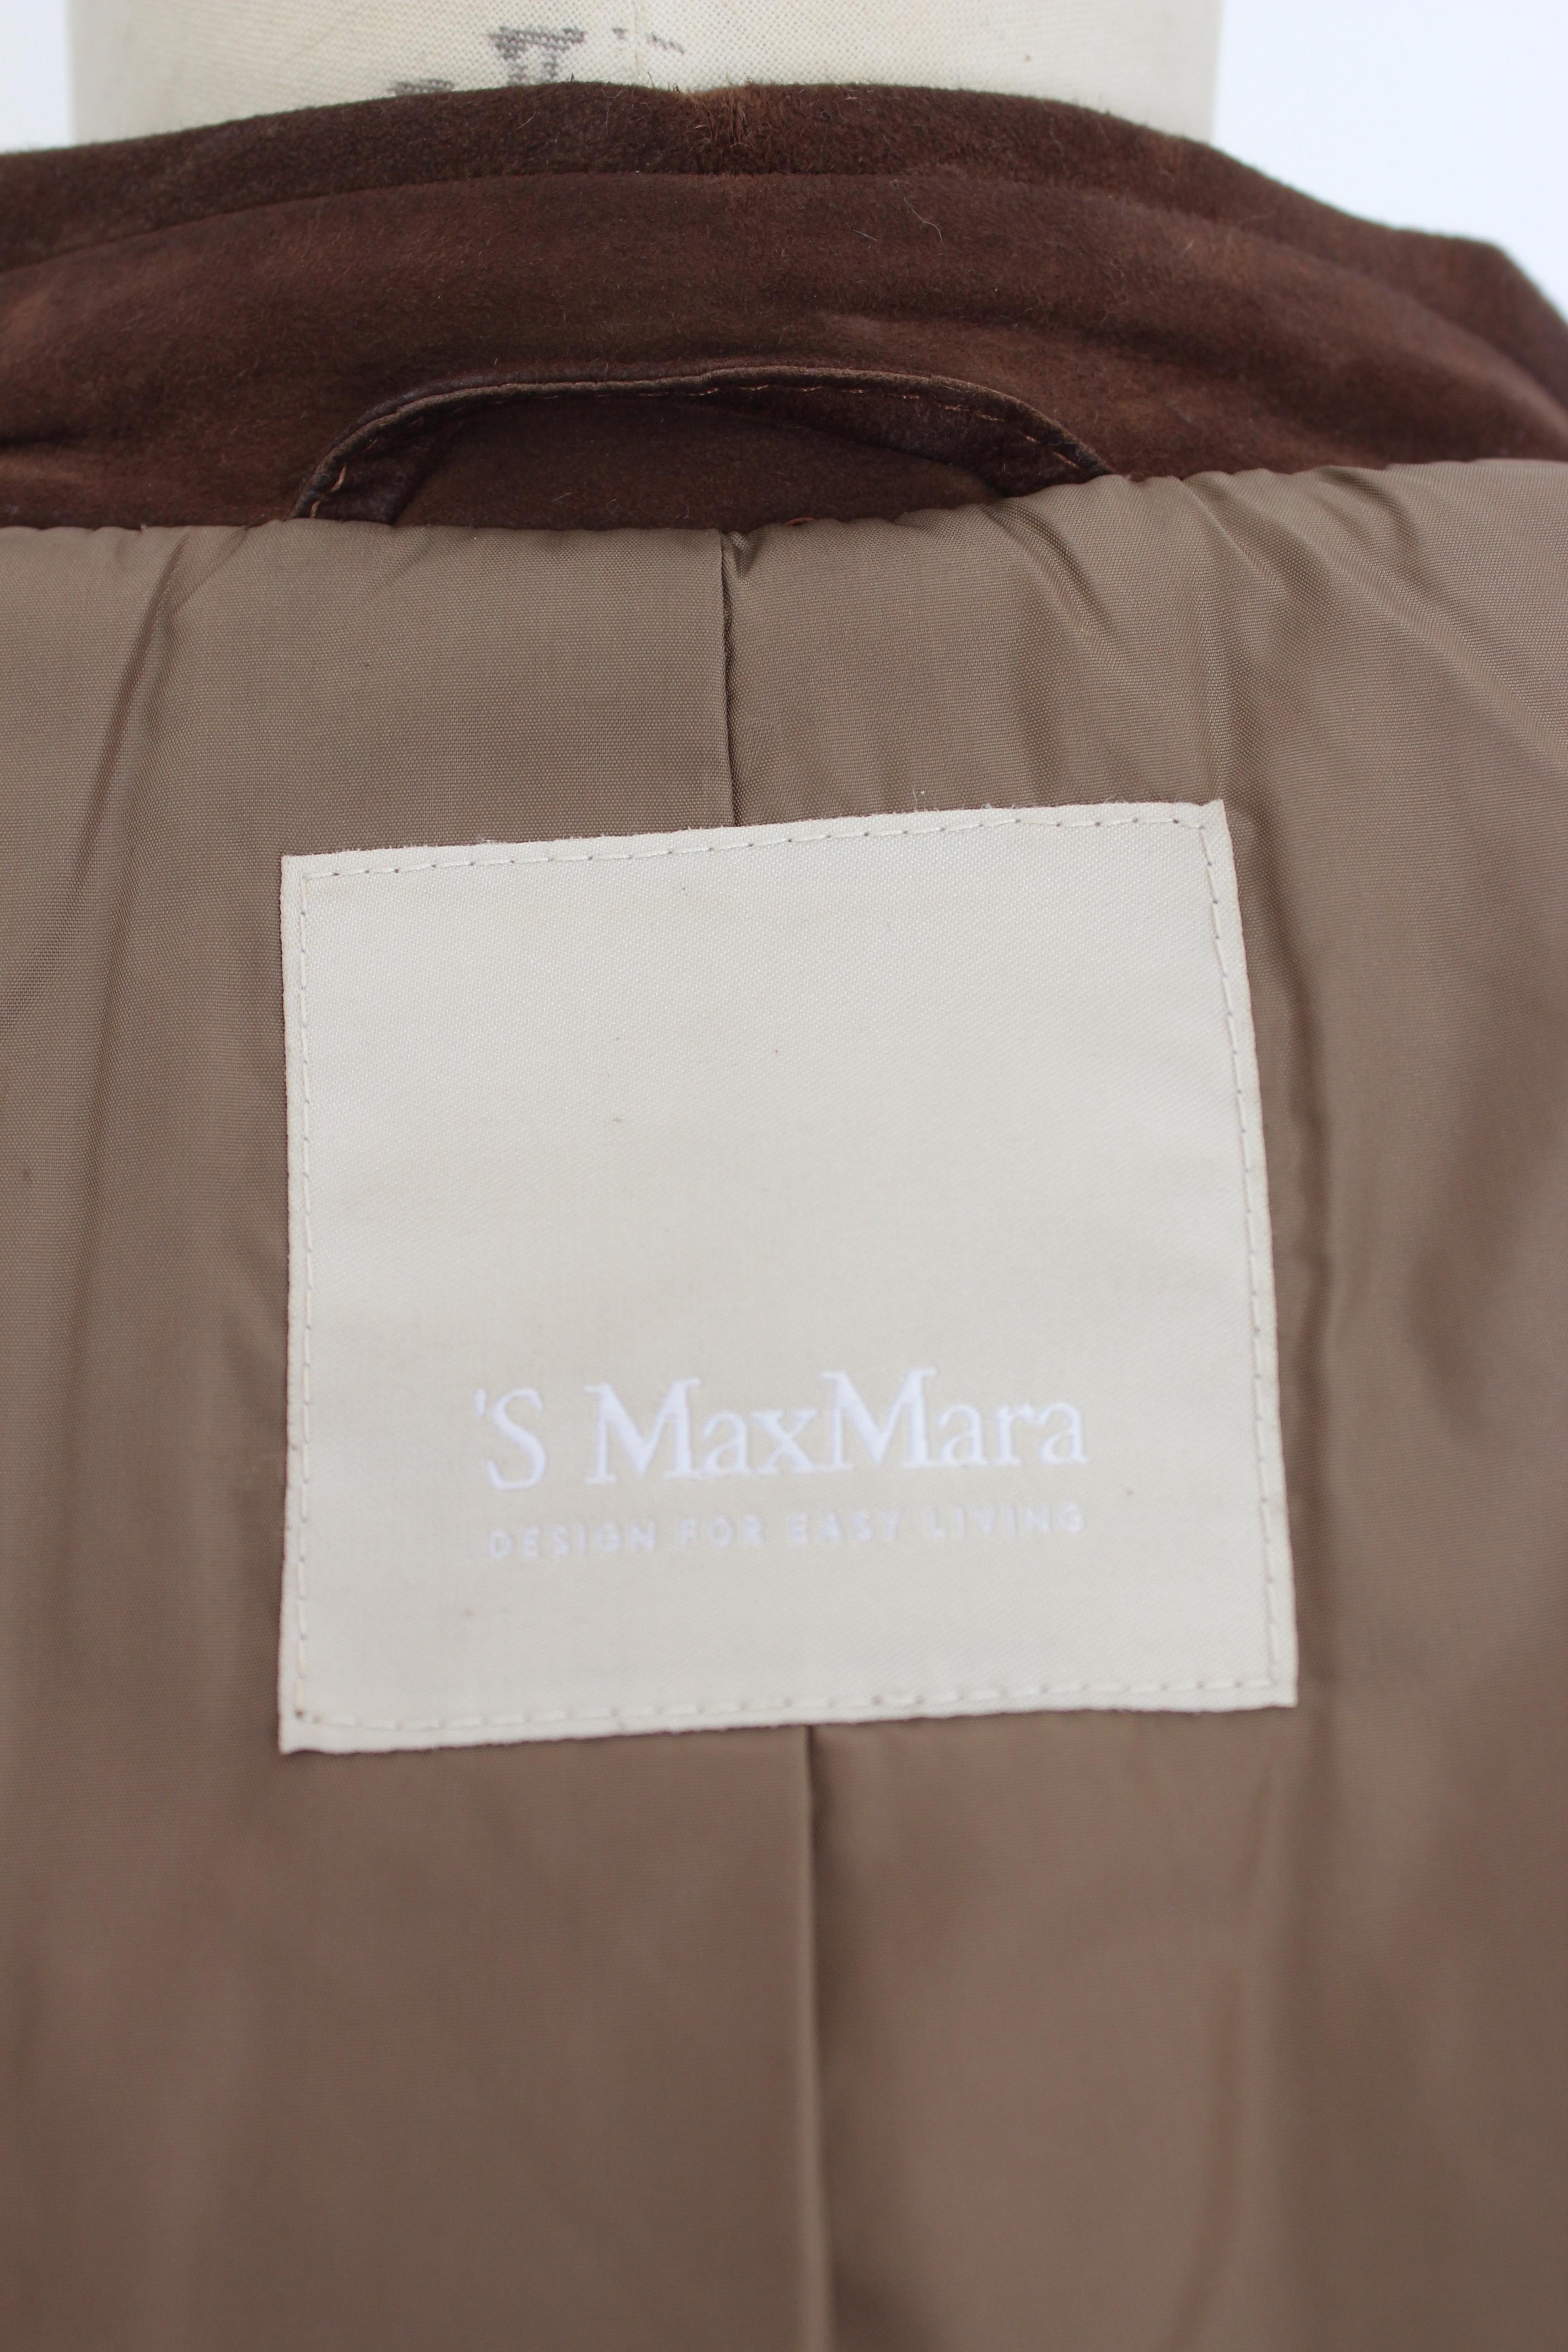 Max Mara Brown Suede Leather Coat 1